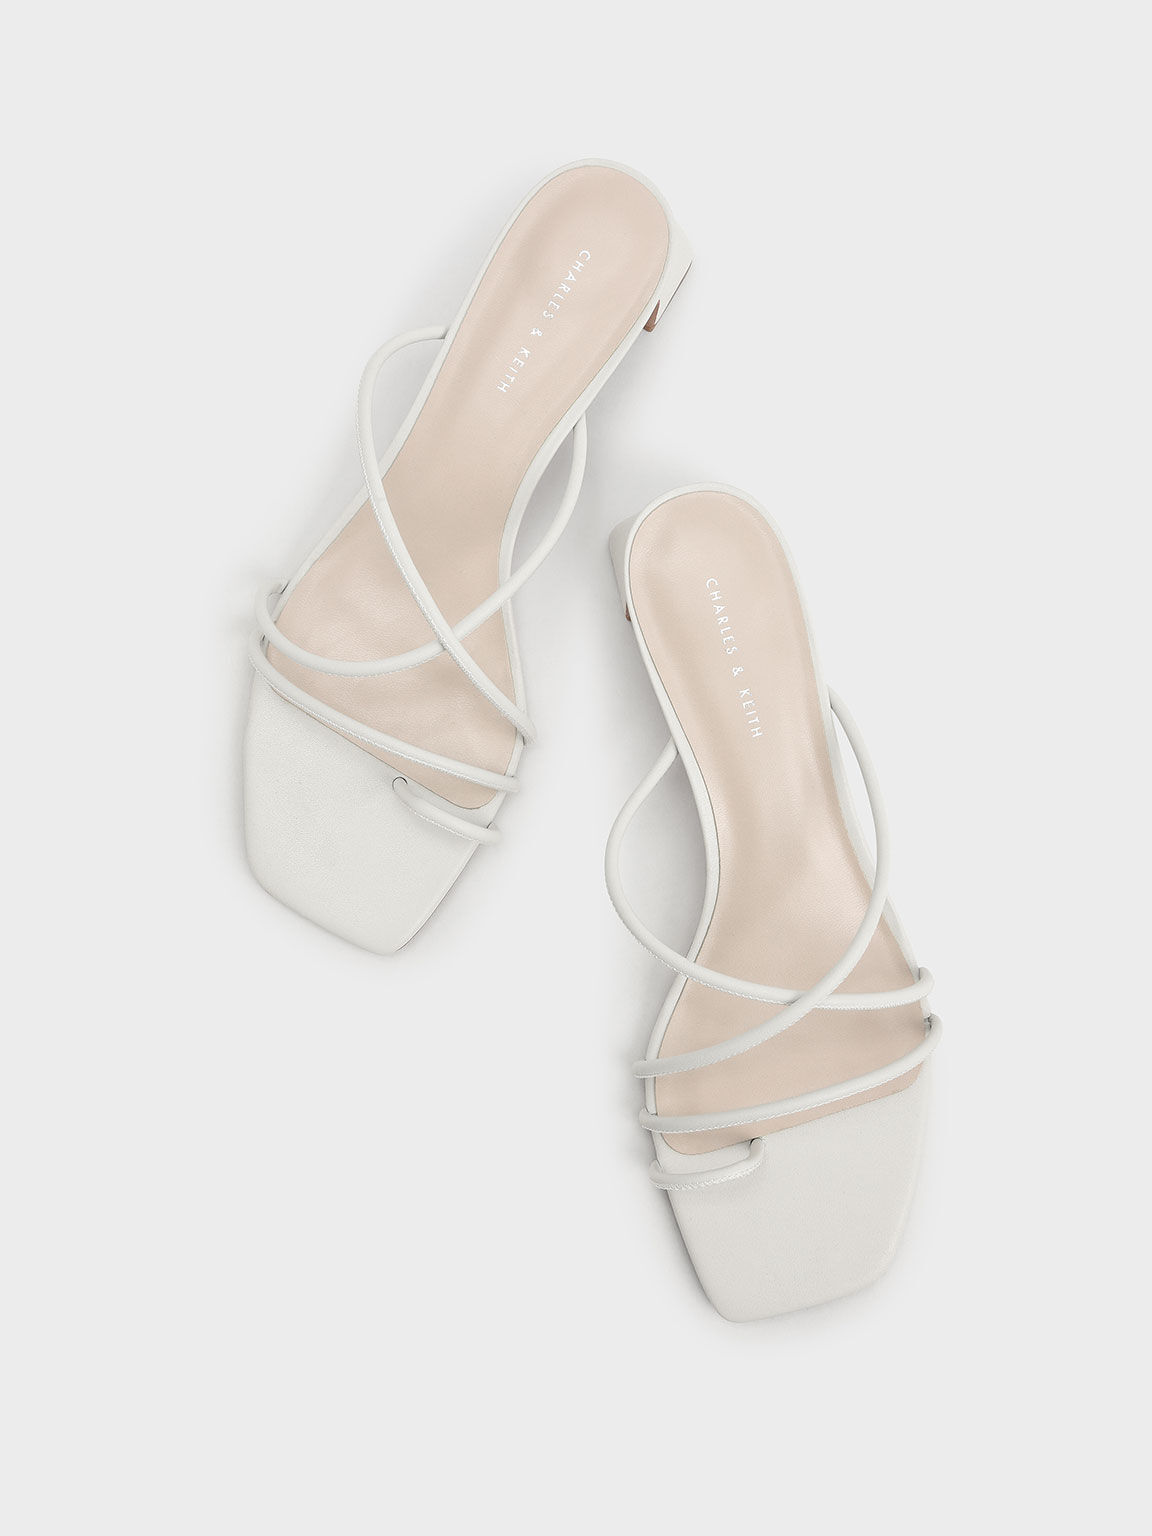 VKEKIEO Toe Ring Cute Slippers High Heel Wedge Beige - Walmart.com